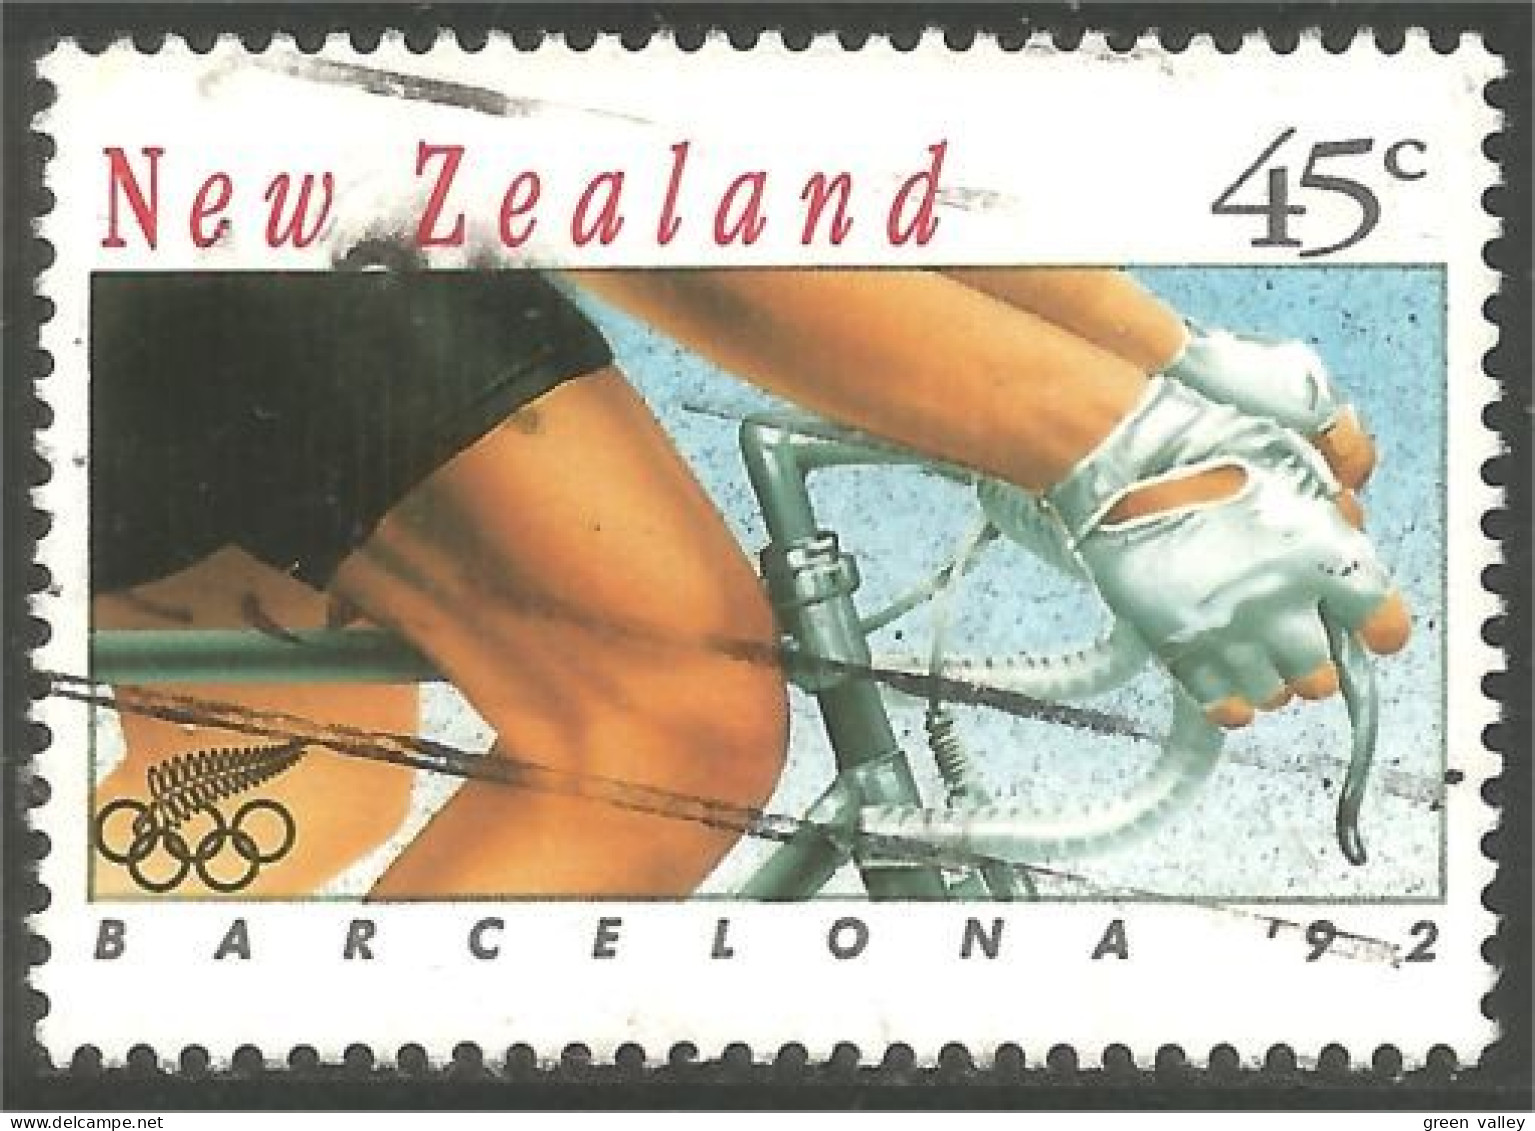 706 New Zealand Olympics Barcelona Cycling Bicycle Race Fahrrad Bicyclette Vélo Cyclisme (NZ-155c) - Vélo